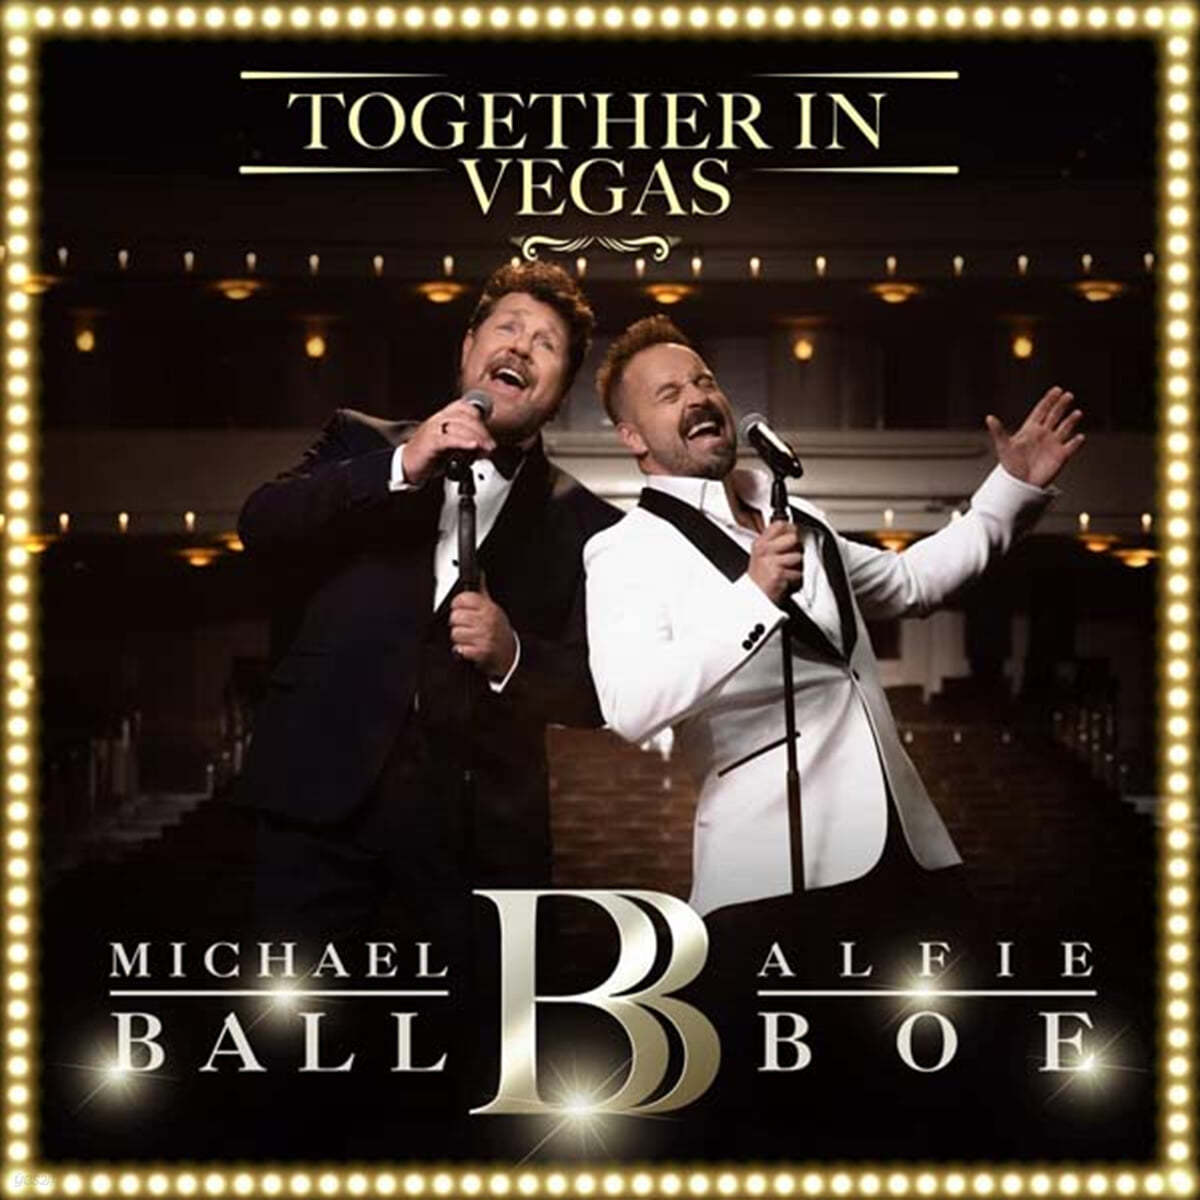 Michael Ball / Alfie Boe (미셸 볼 / 알피 보) - Together In Vegas [LP]